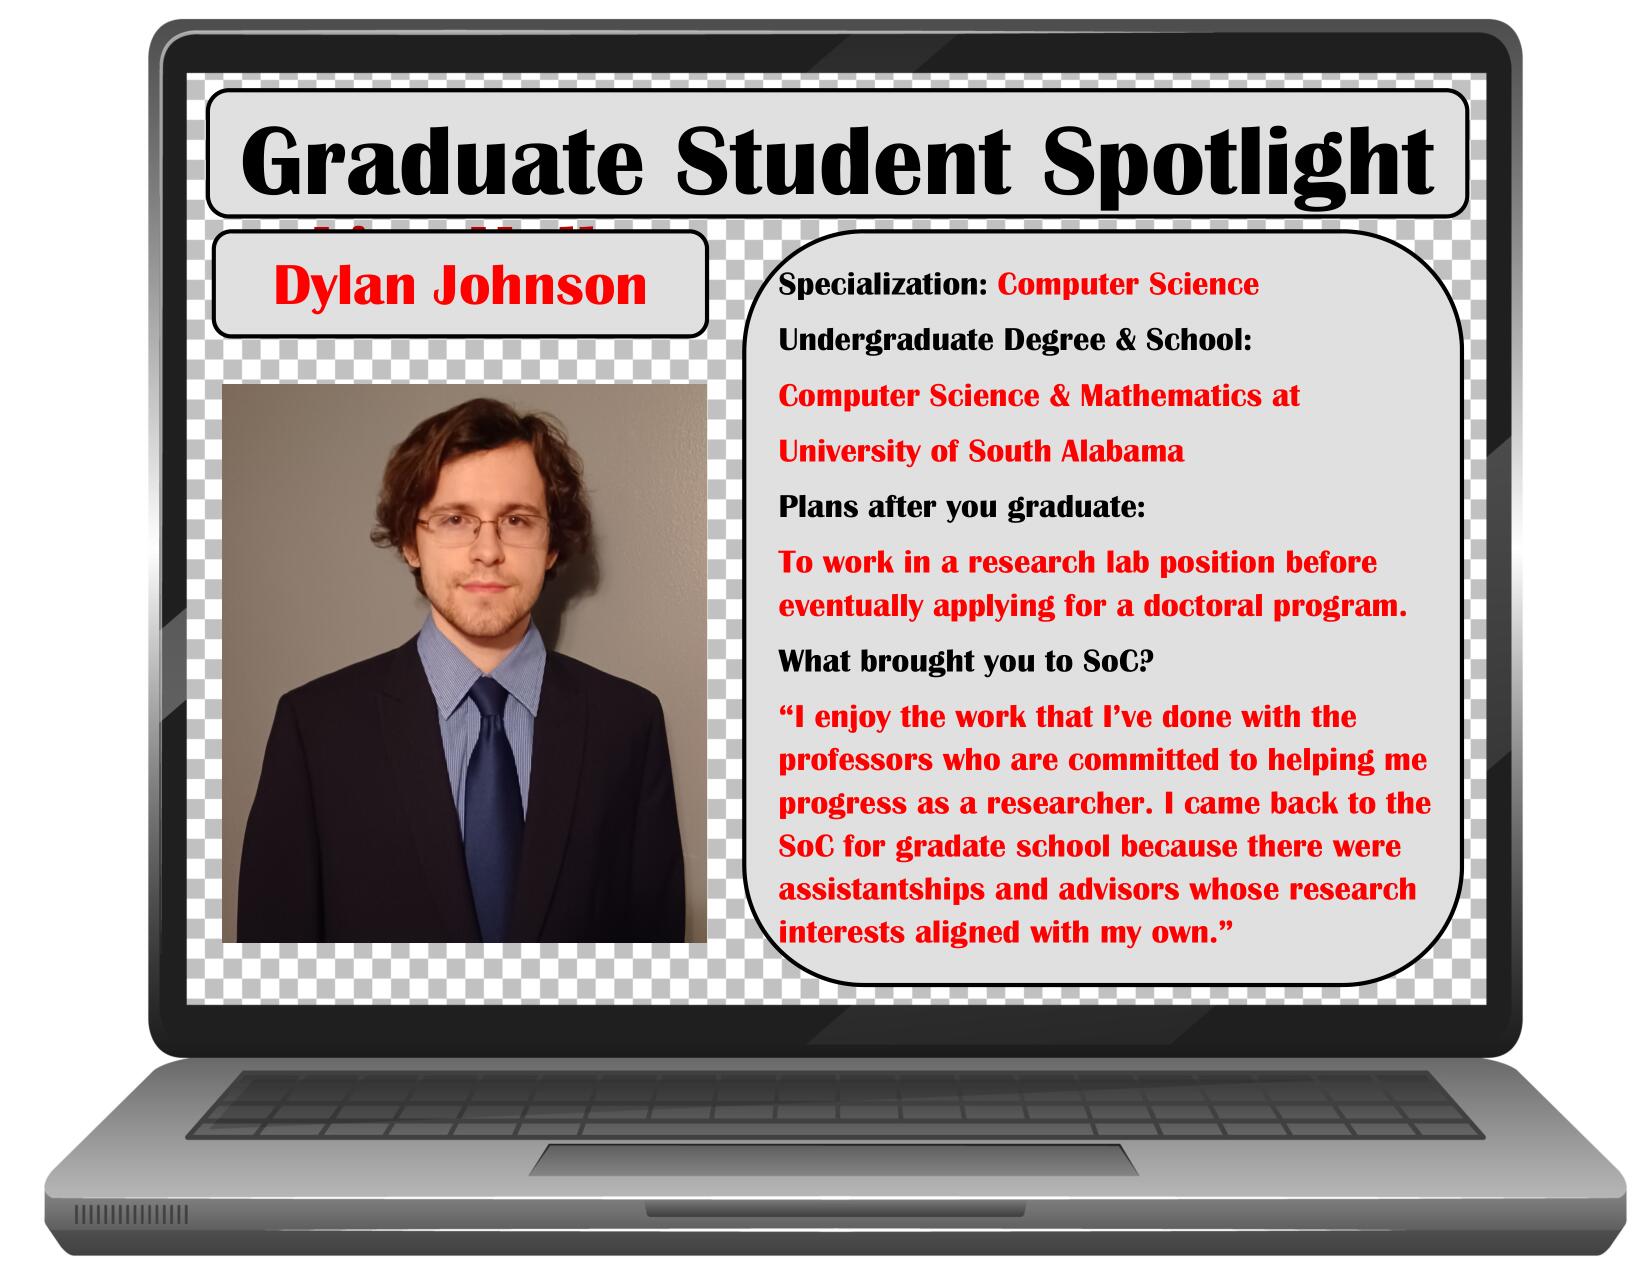 Dylan Johnson - Graduate Student Spotlight